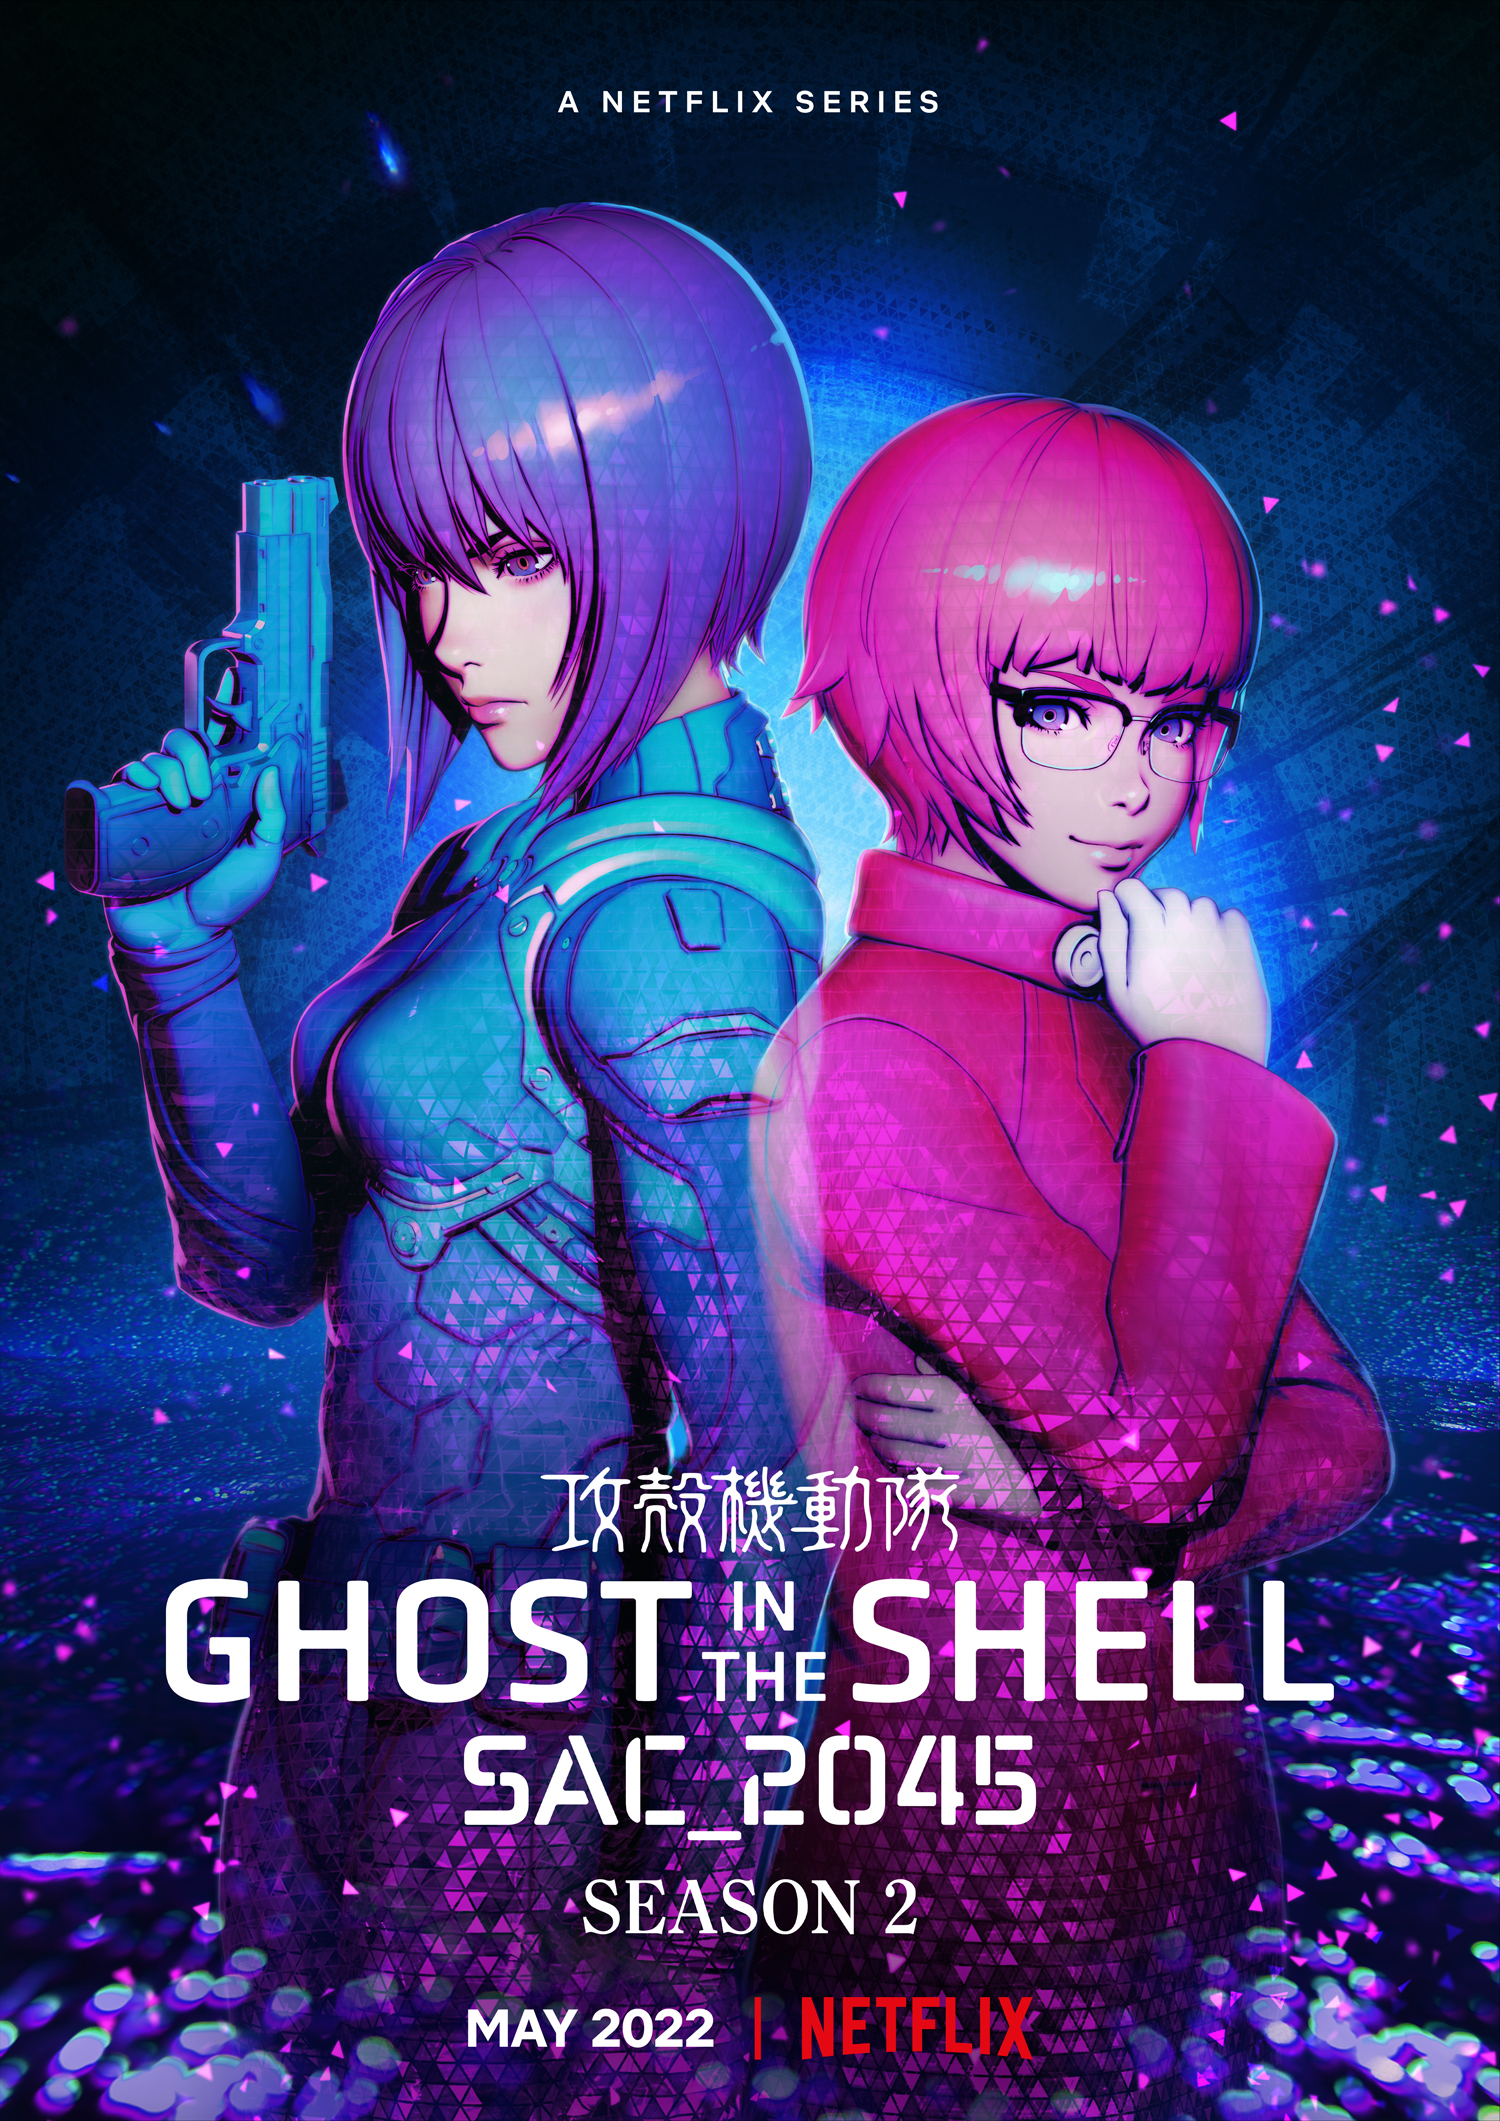 Ghost in the Shell: SAC_2045 Season 2 key visual